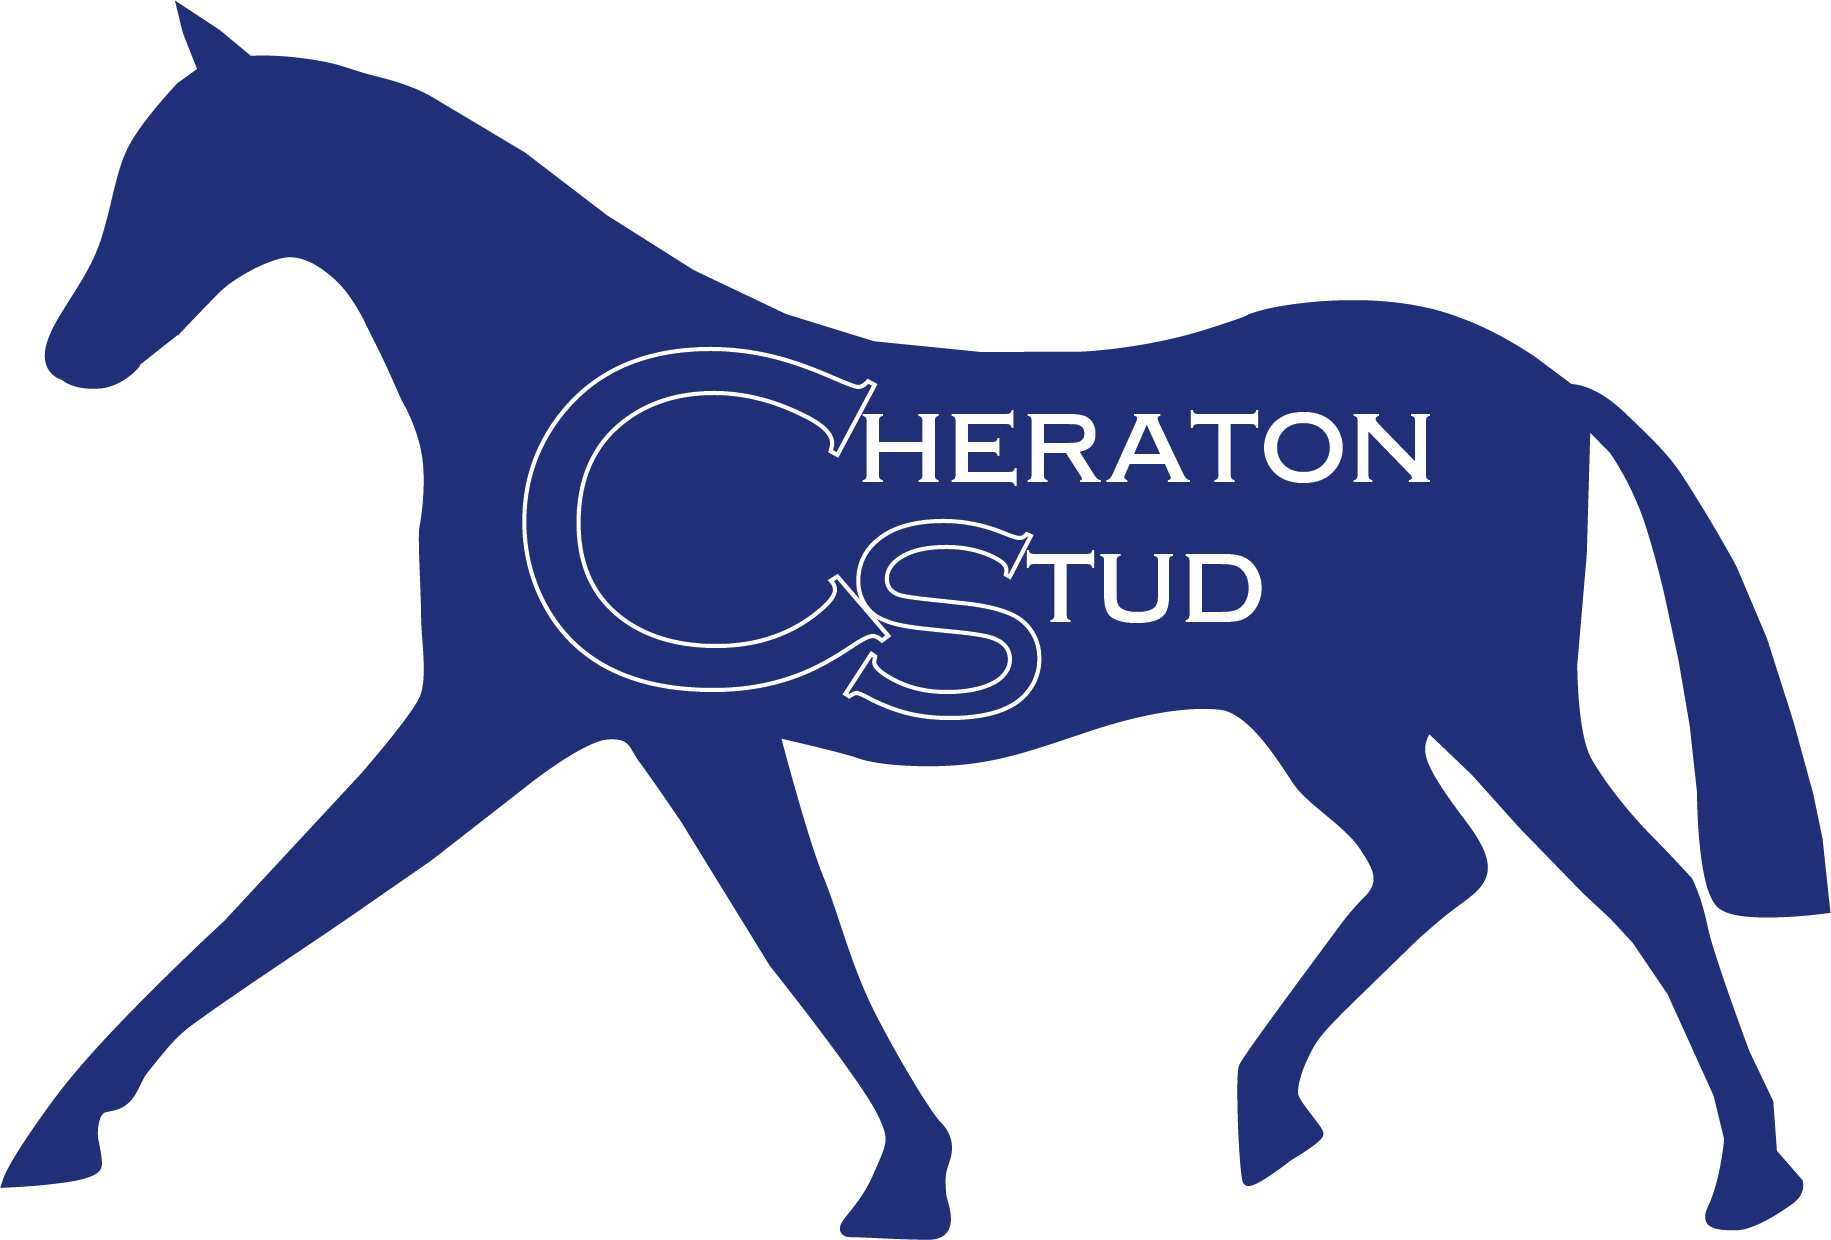 Cheraton Stud